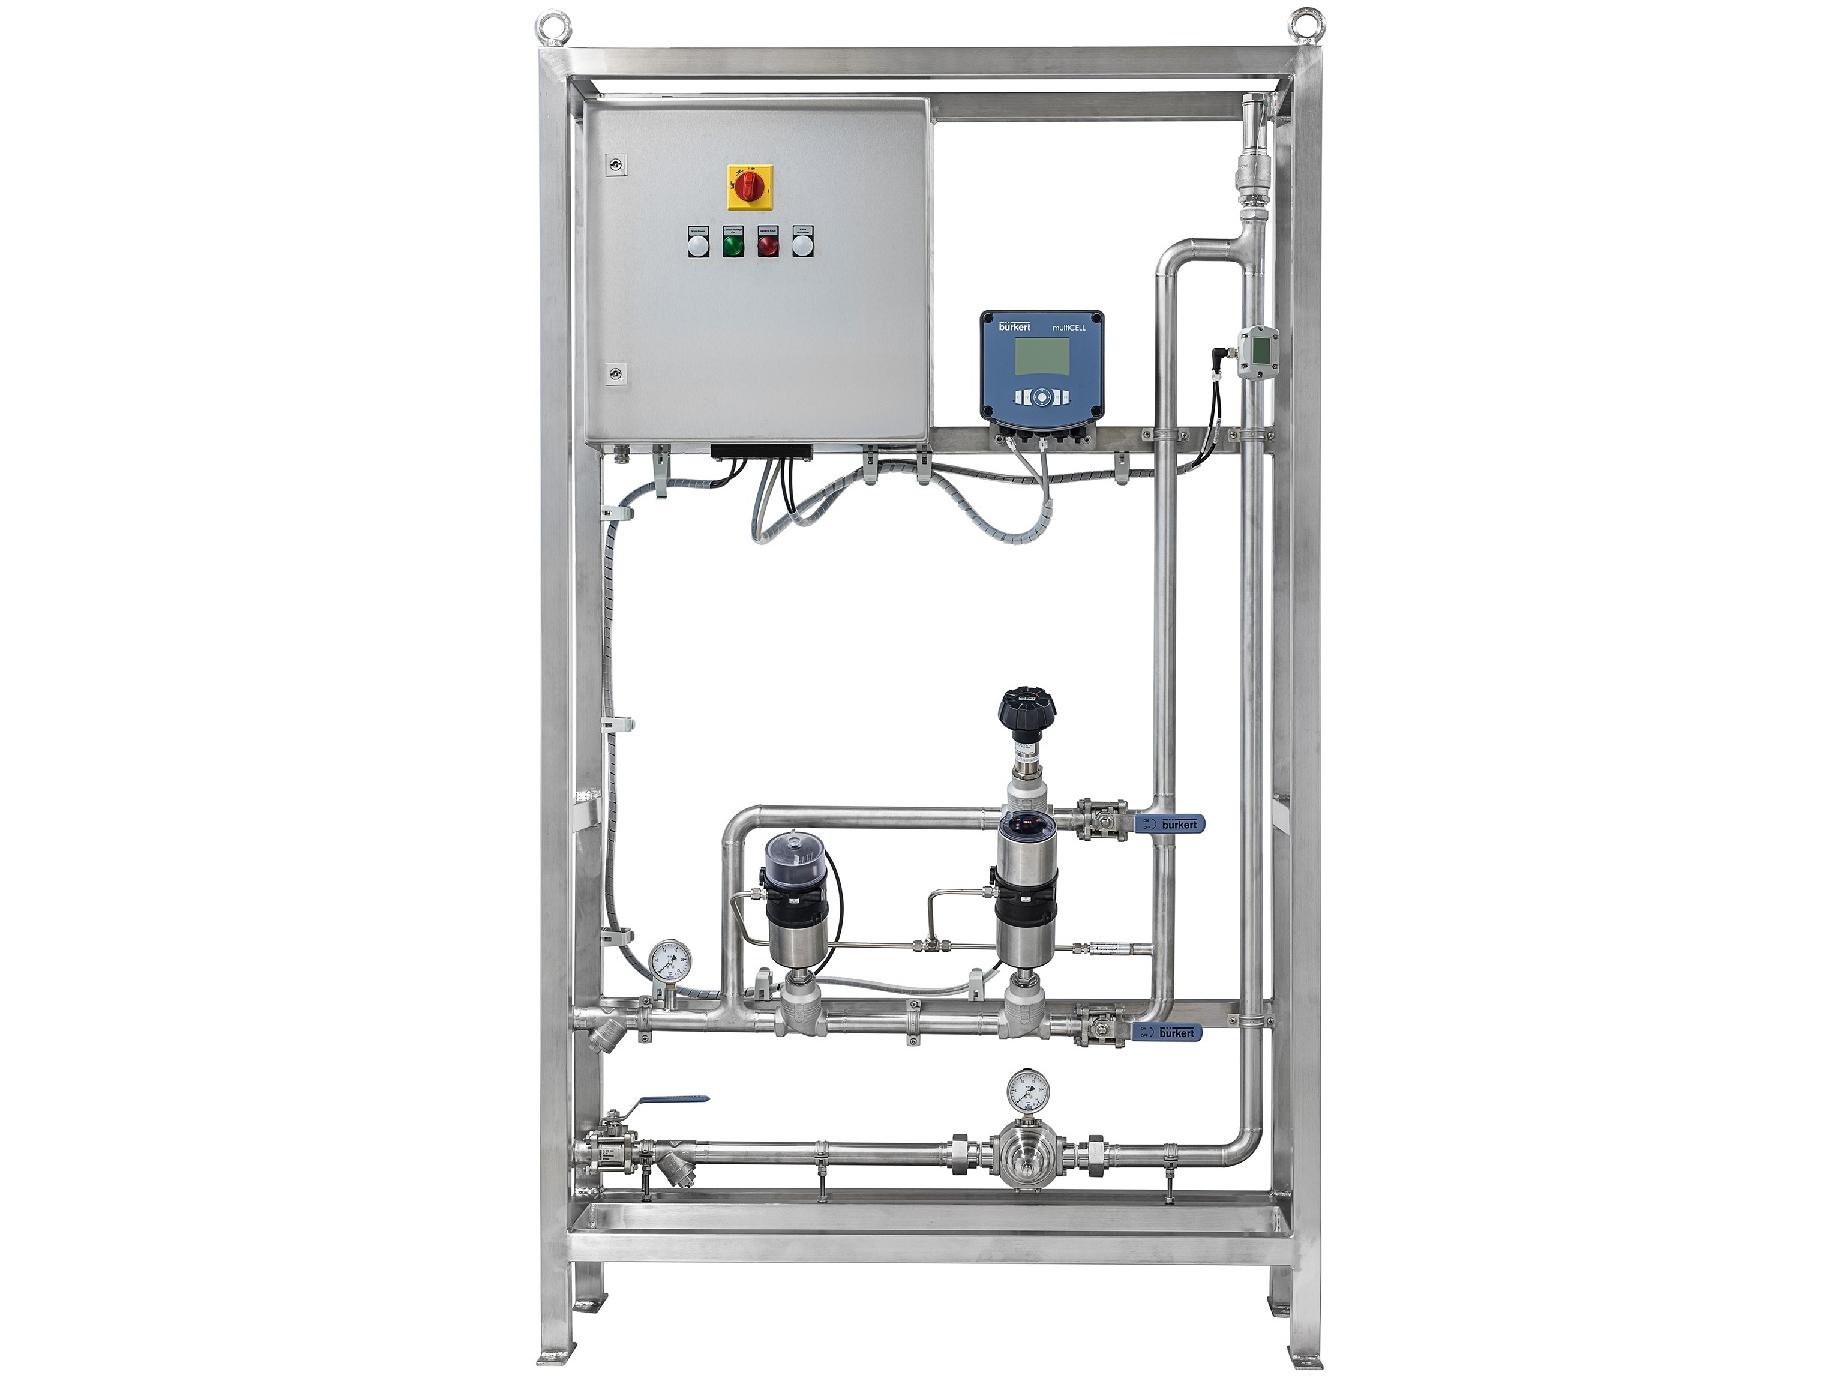 Optimising water treatment process control